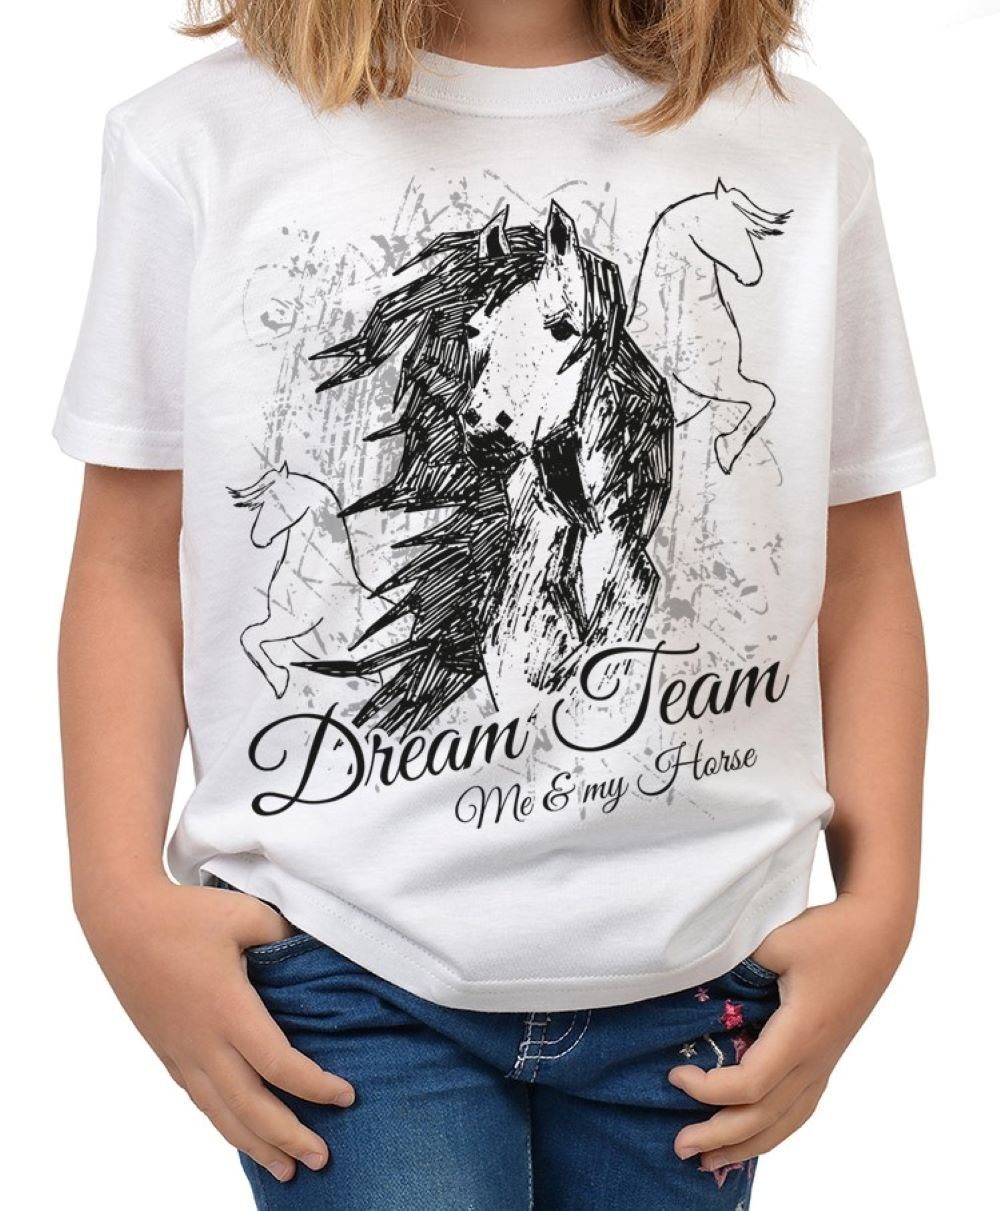 Tini - Shirts T-Shirt Mädchen Pferde Shirt Pferdesprüche KIndershirt: Dream Team | T-Shirts